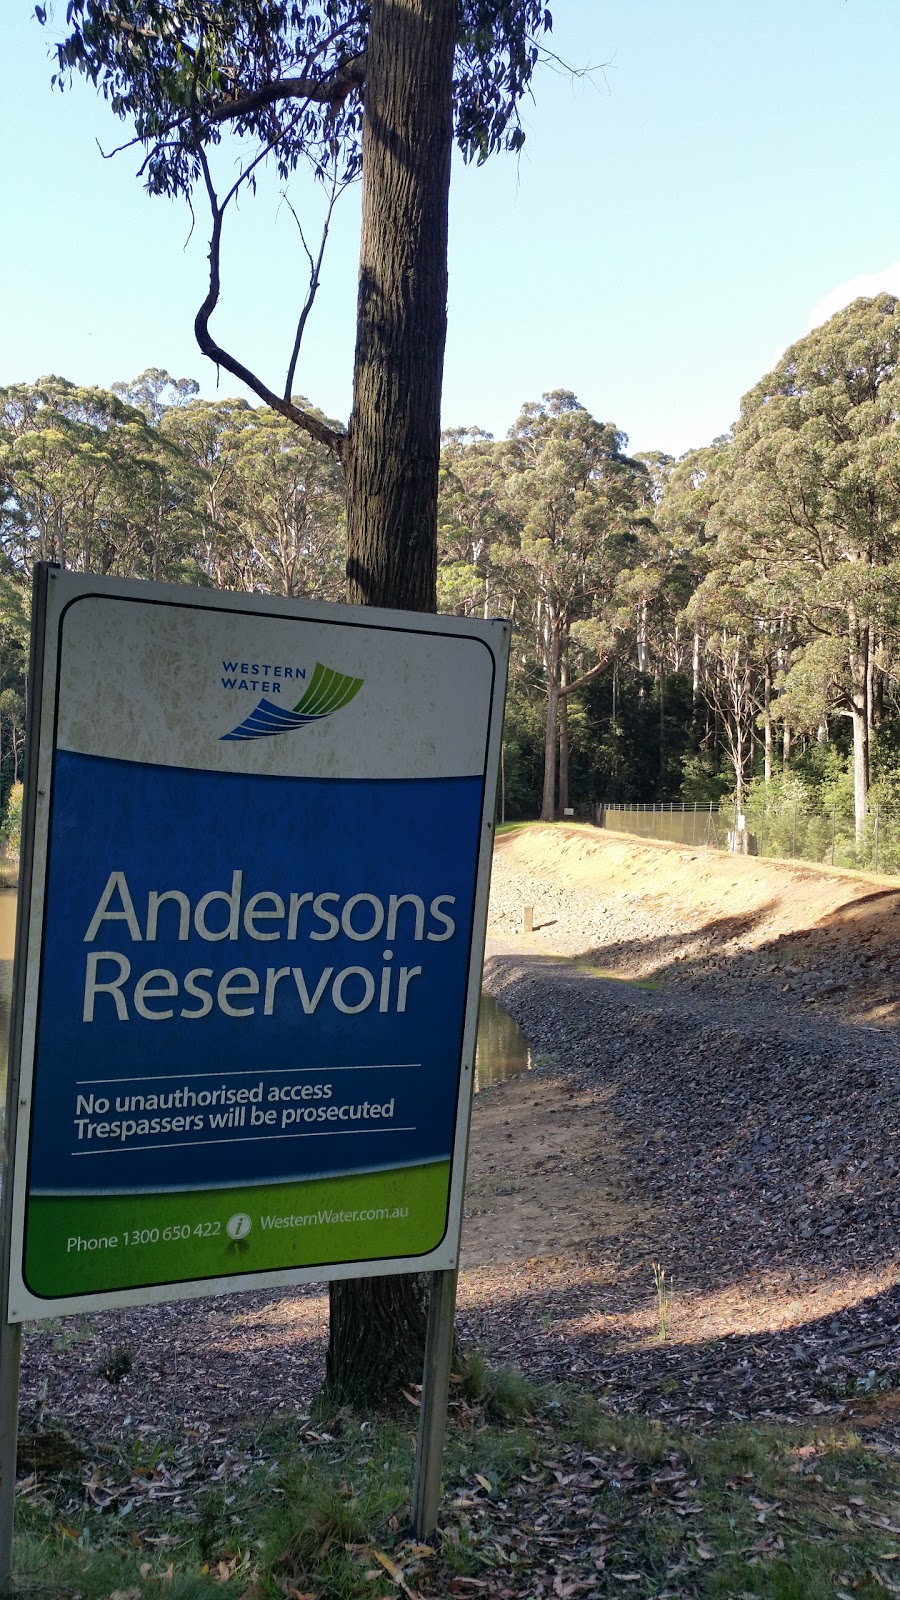 Andersons Reservoir | park | Mount Macedon VIC 3441, Australia